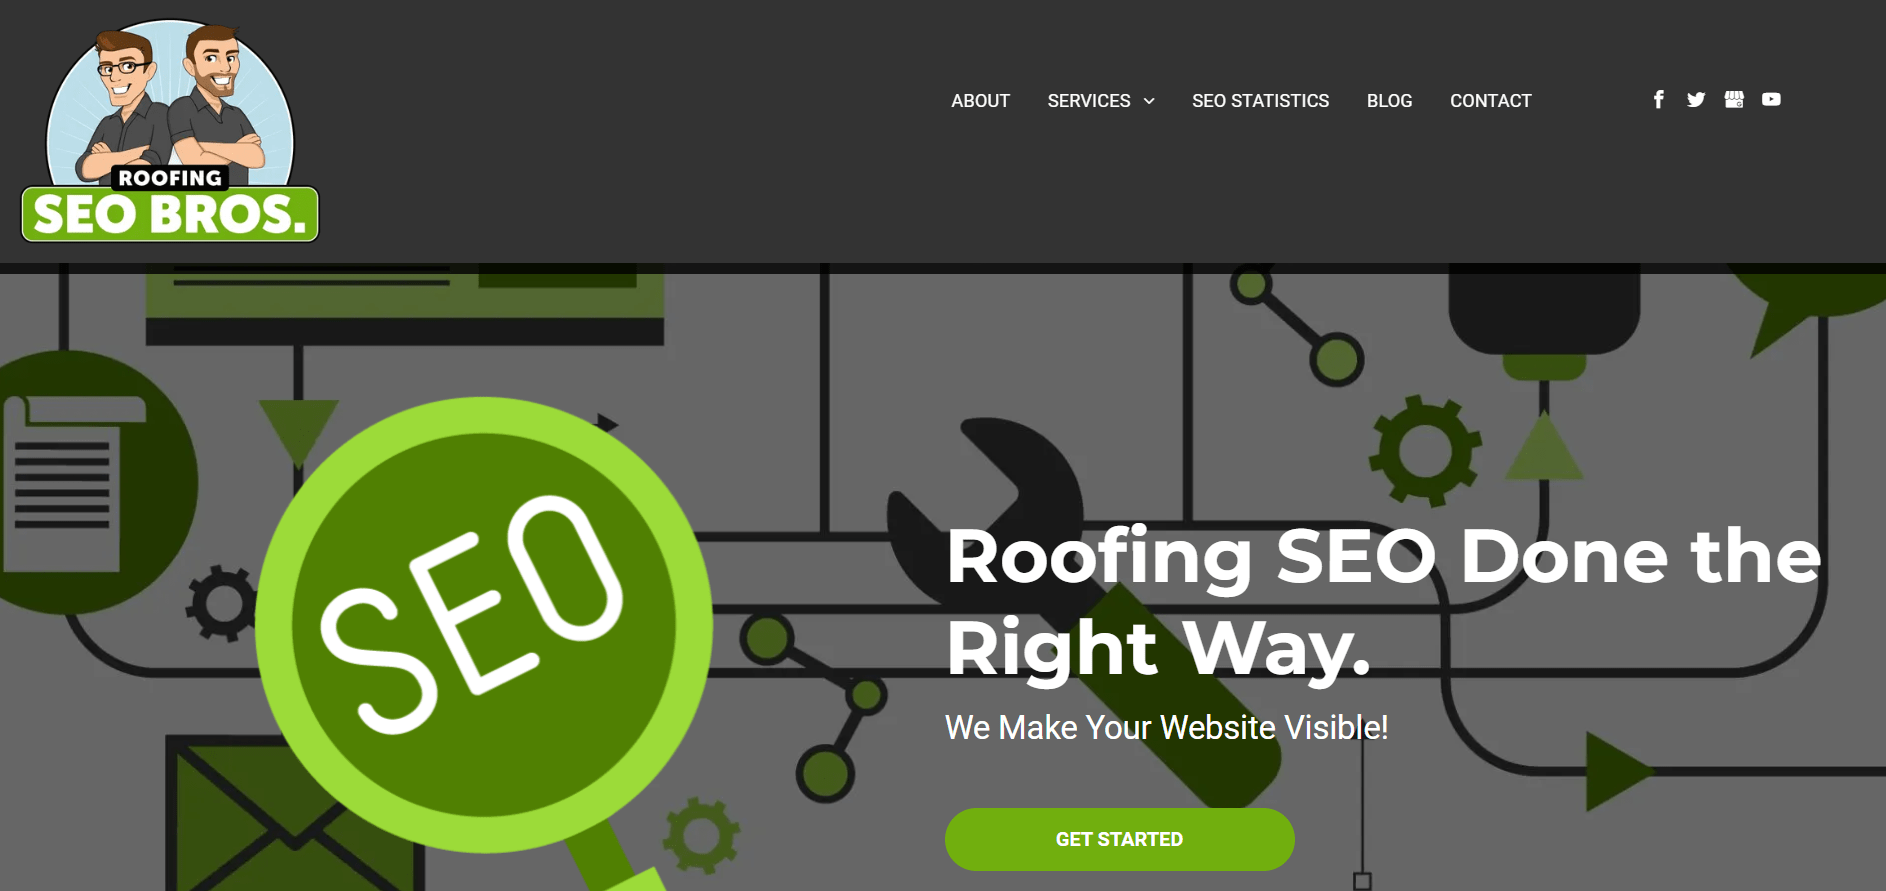 Roofing SEO Bros digital marketing